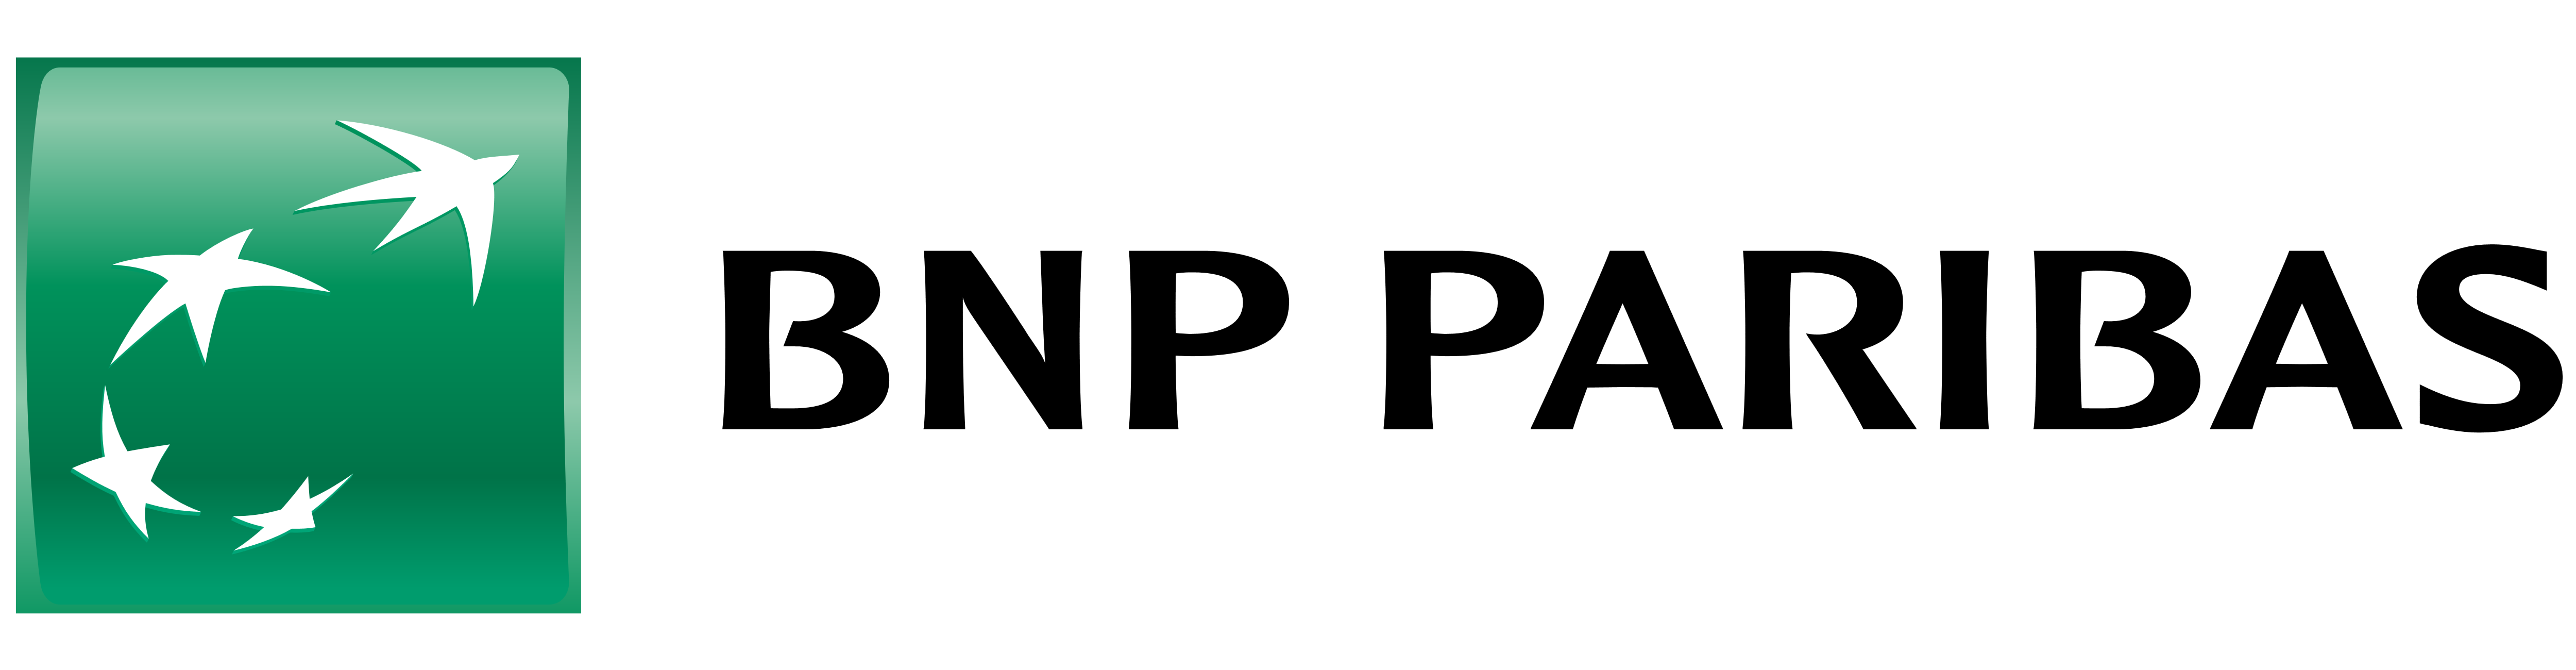 Bnp-paribas-logo